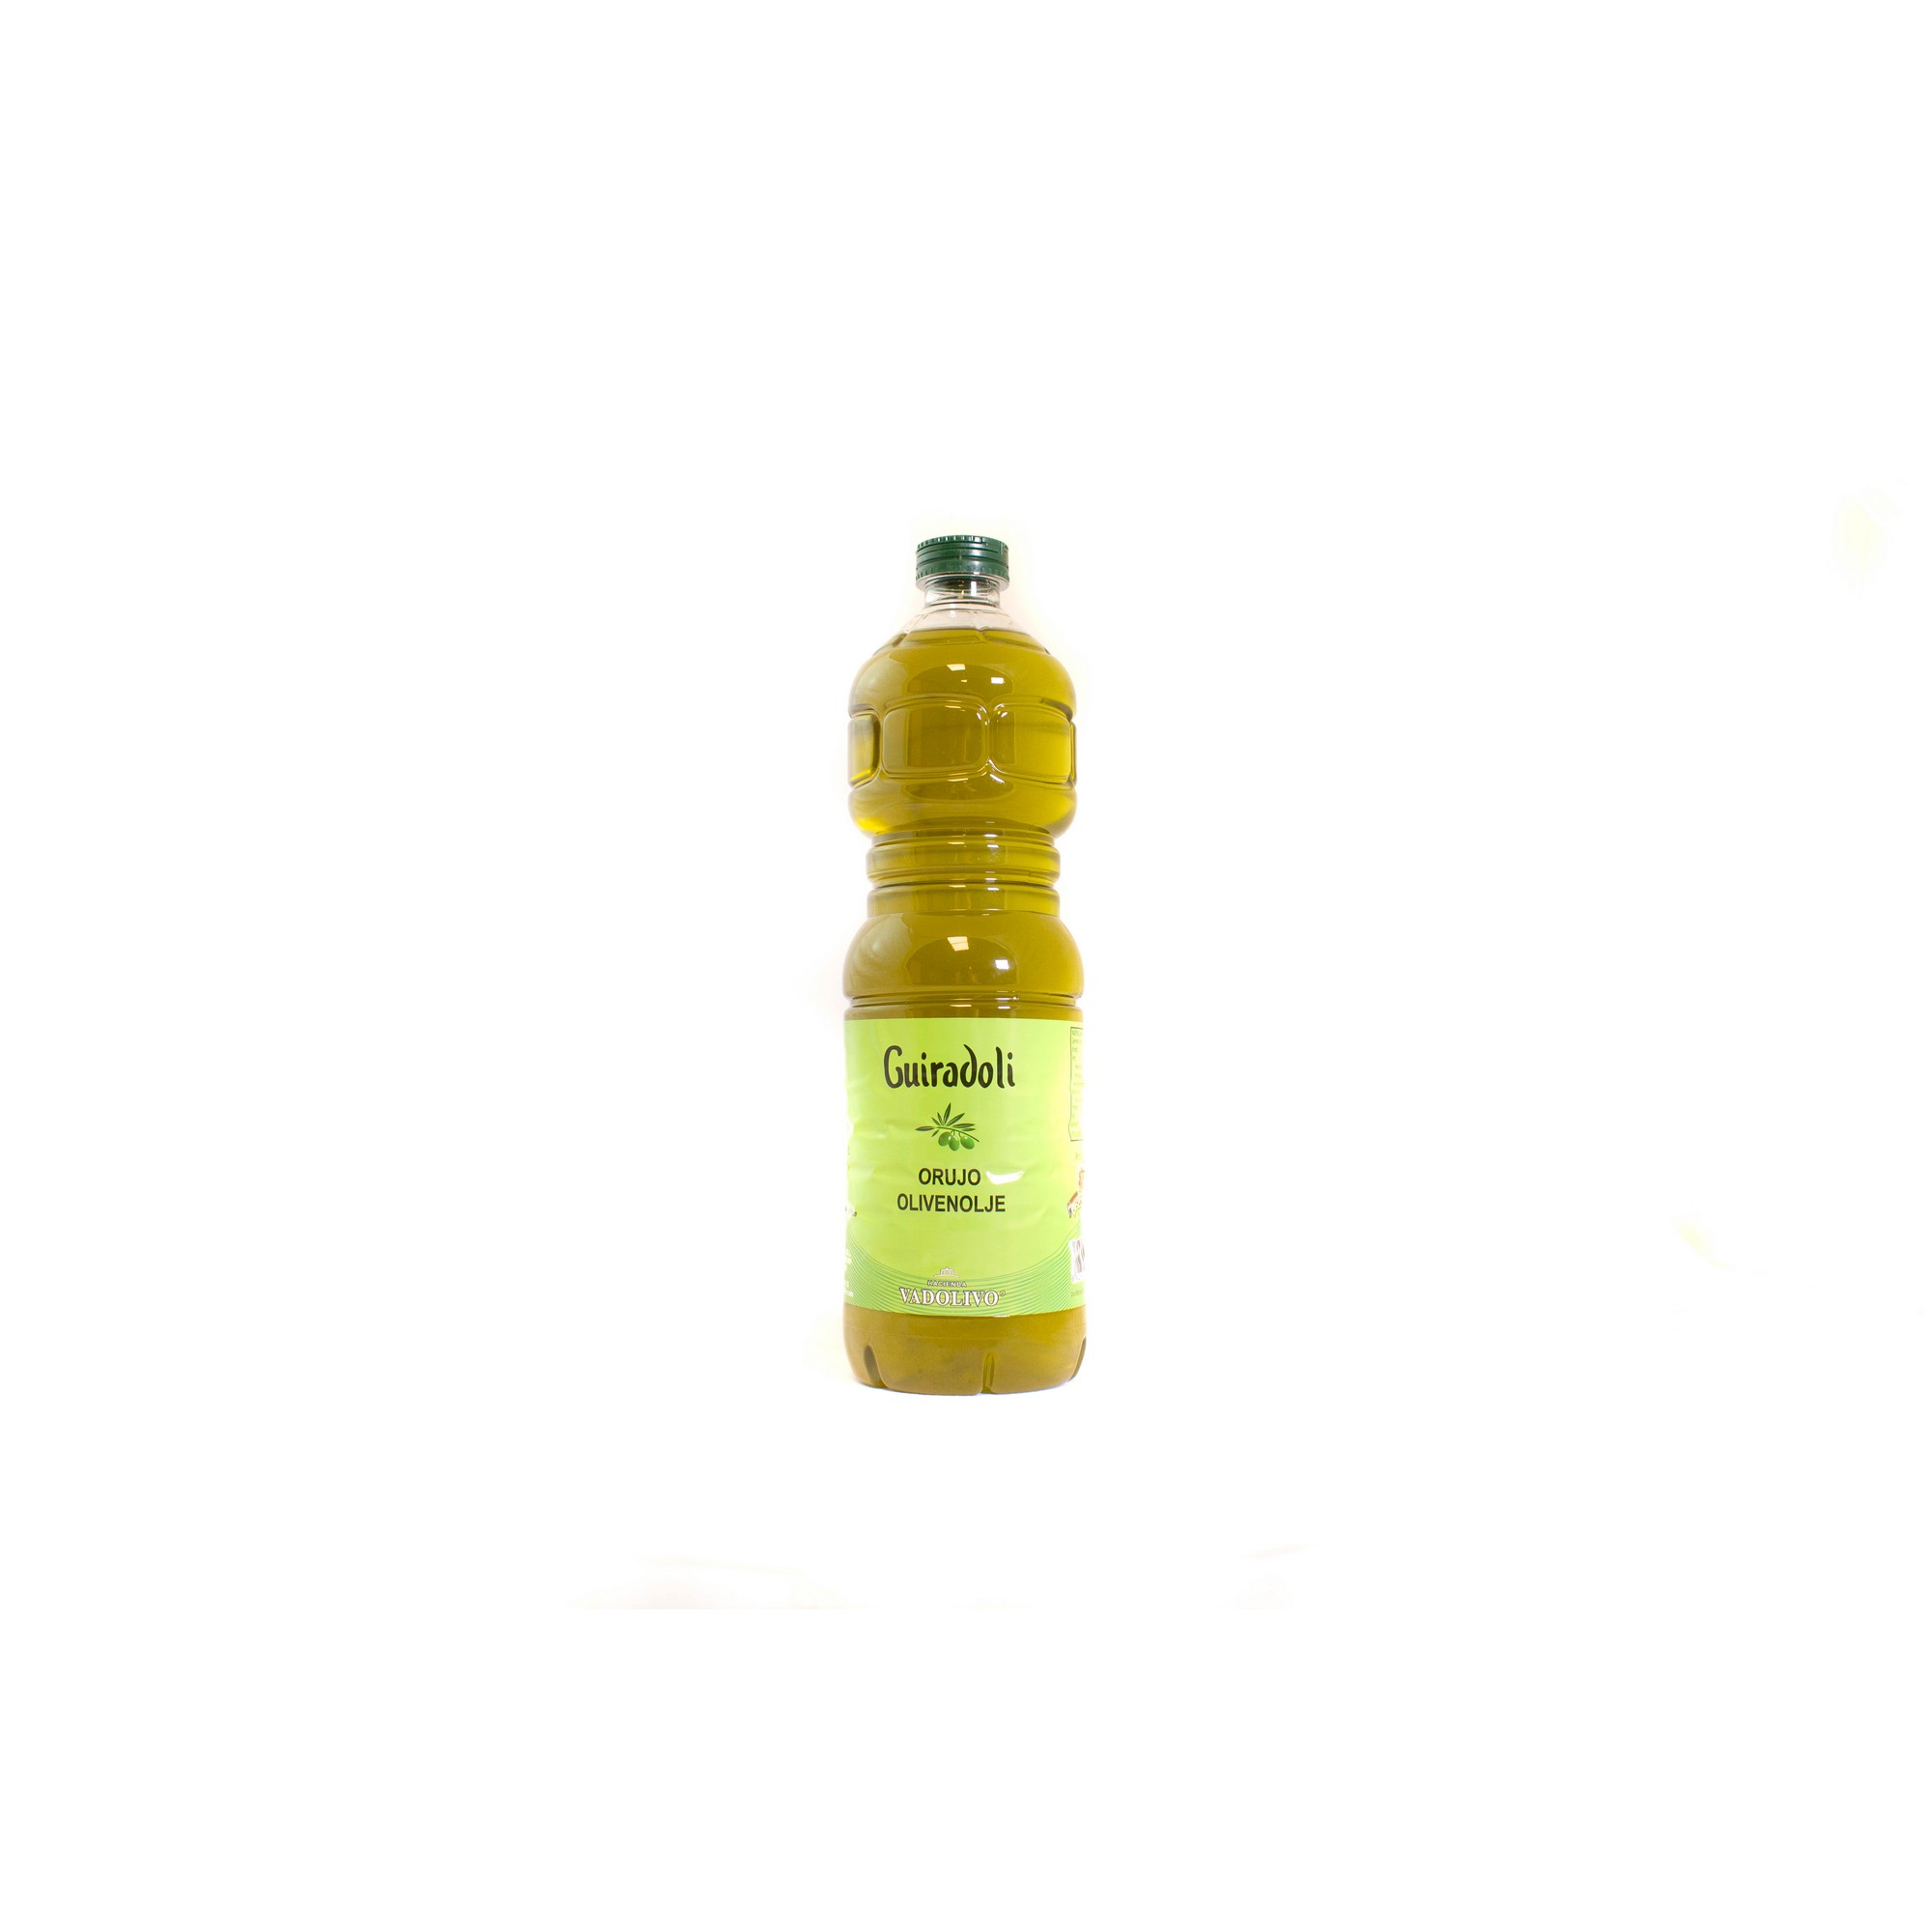 Olivenolje orujo guiradoli   1l